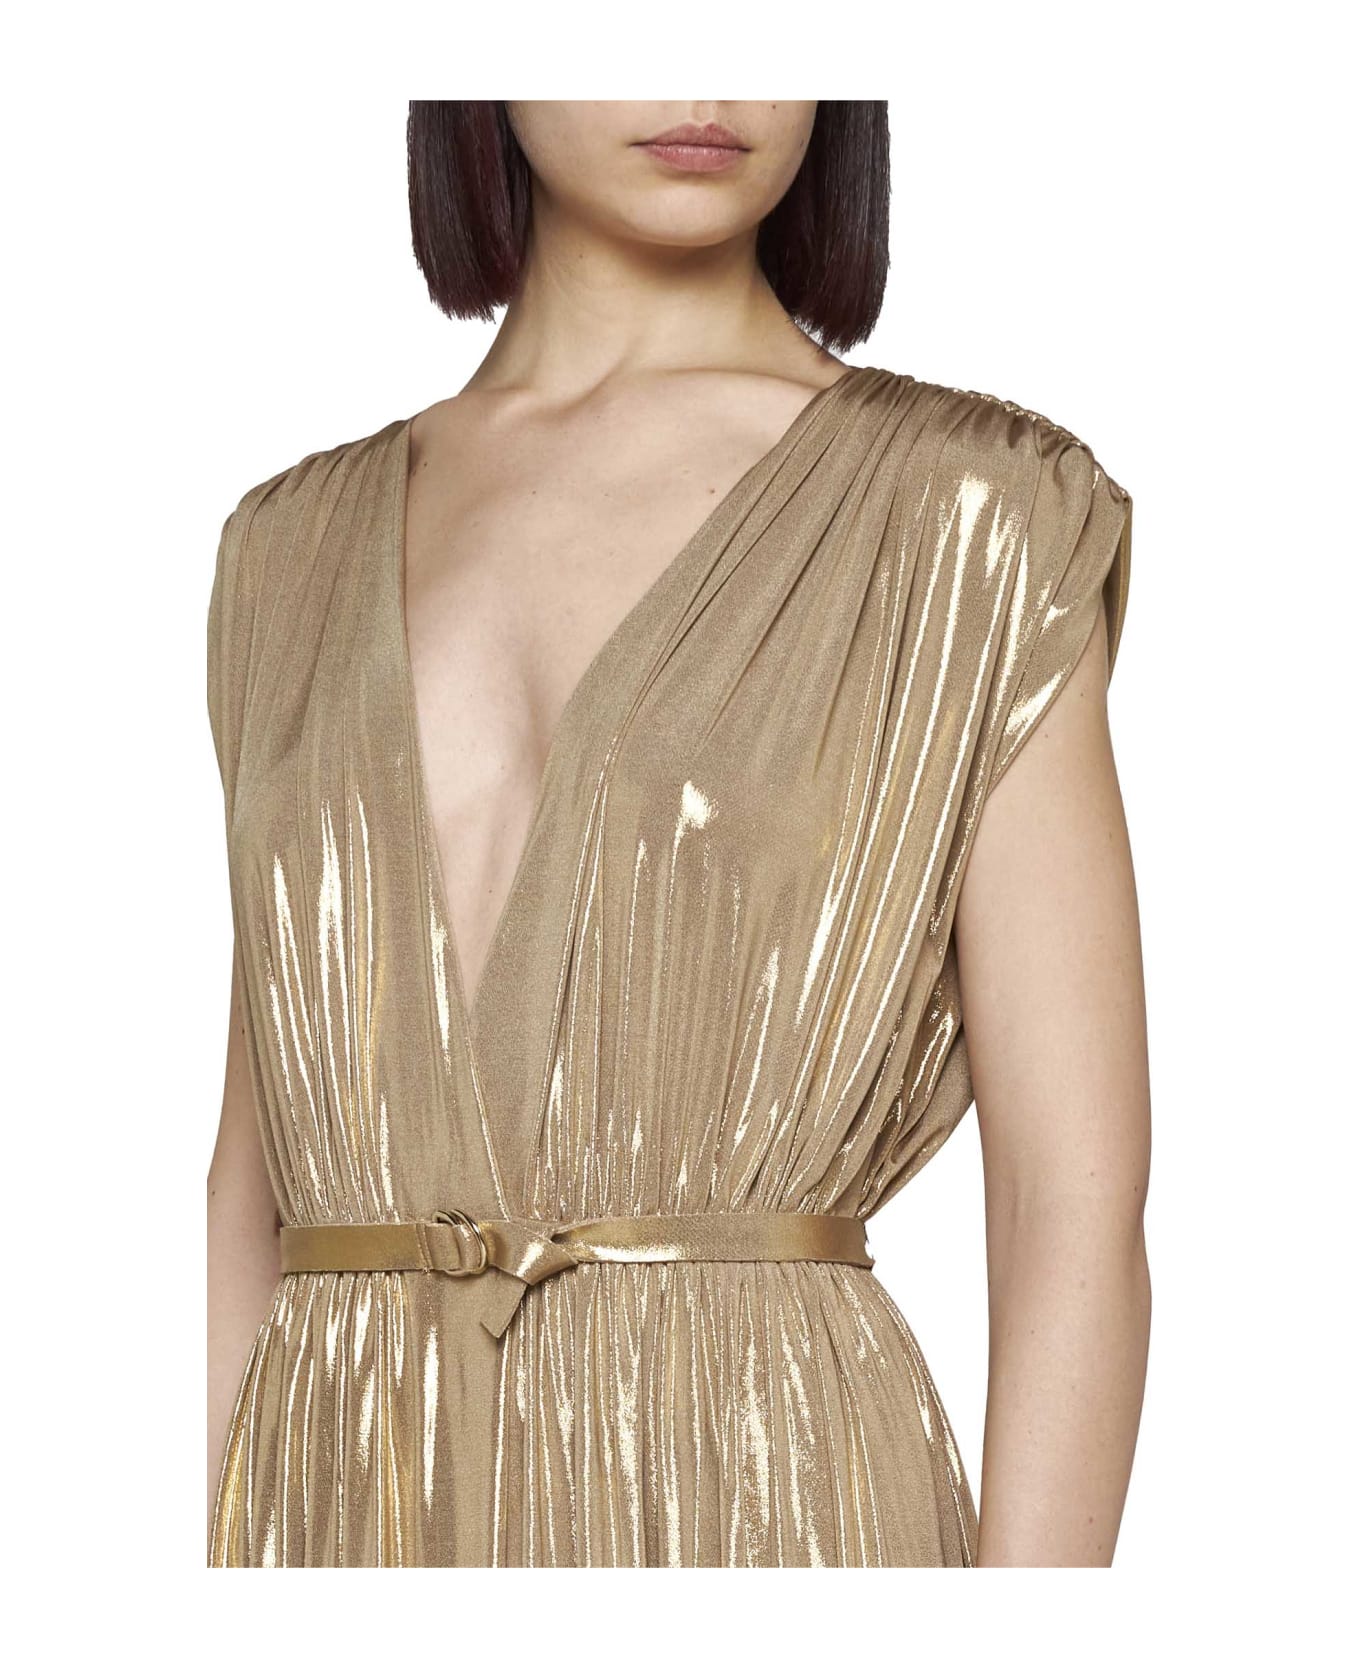 Norma Kamali Dress - Golden